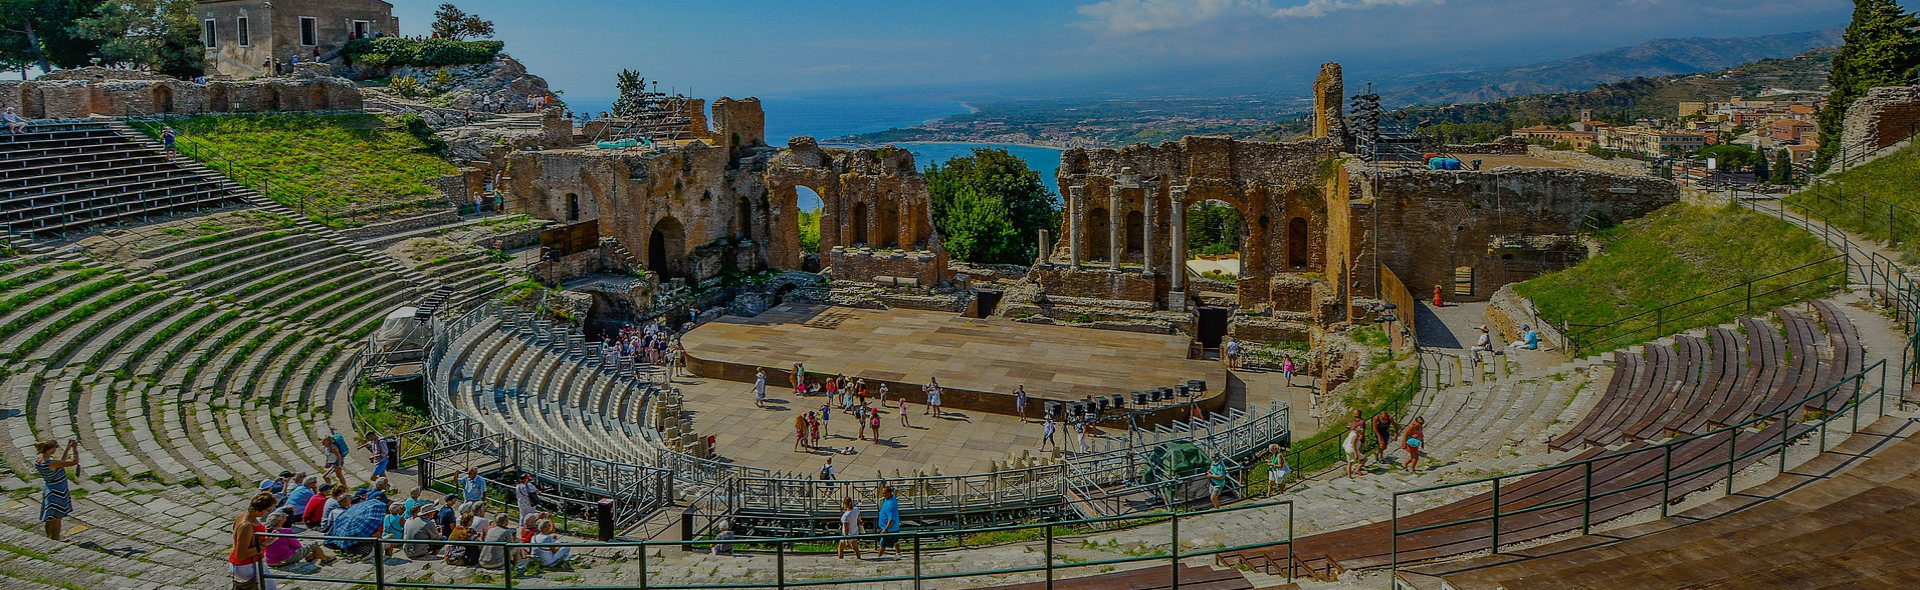 Ancient greek theater of Taormina